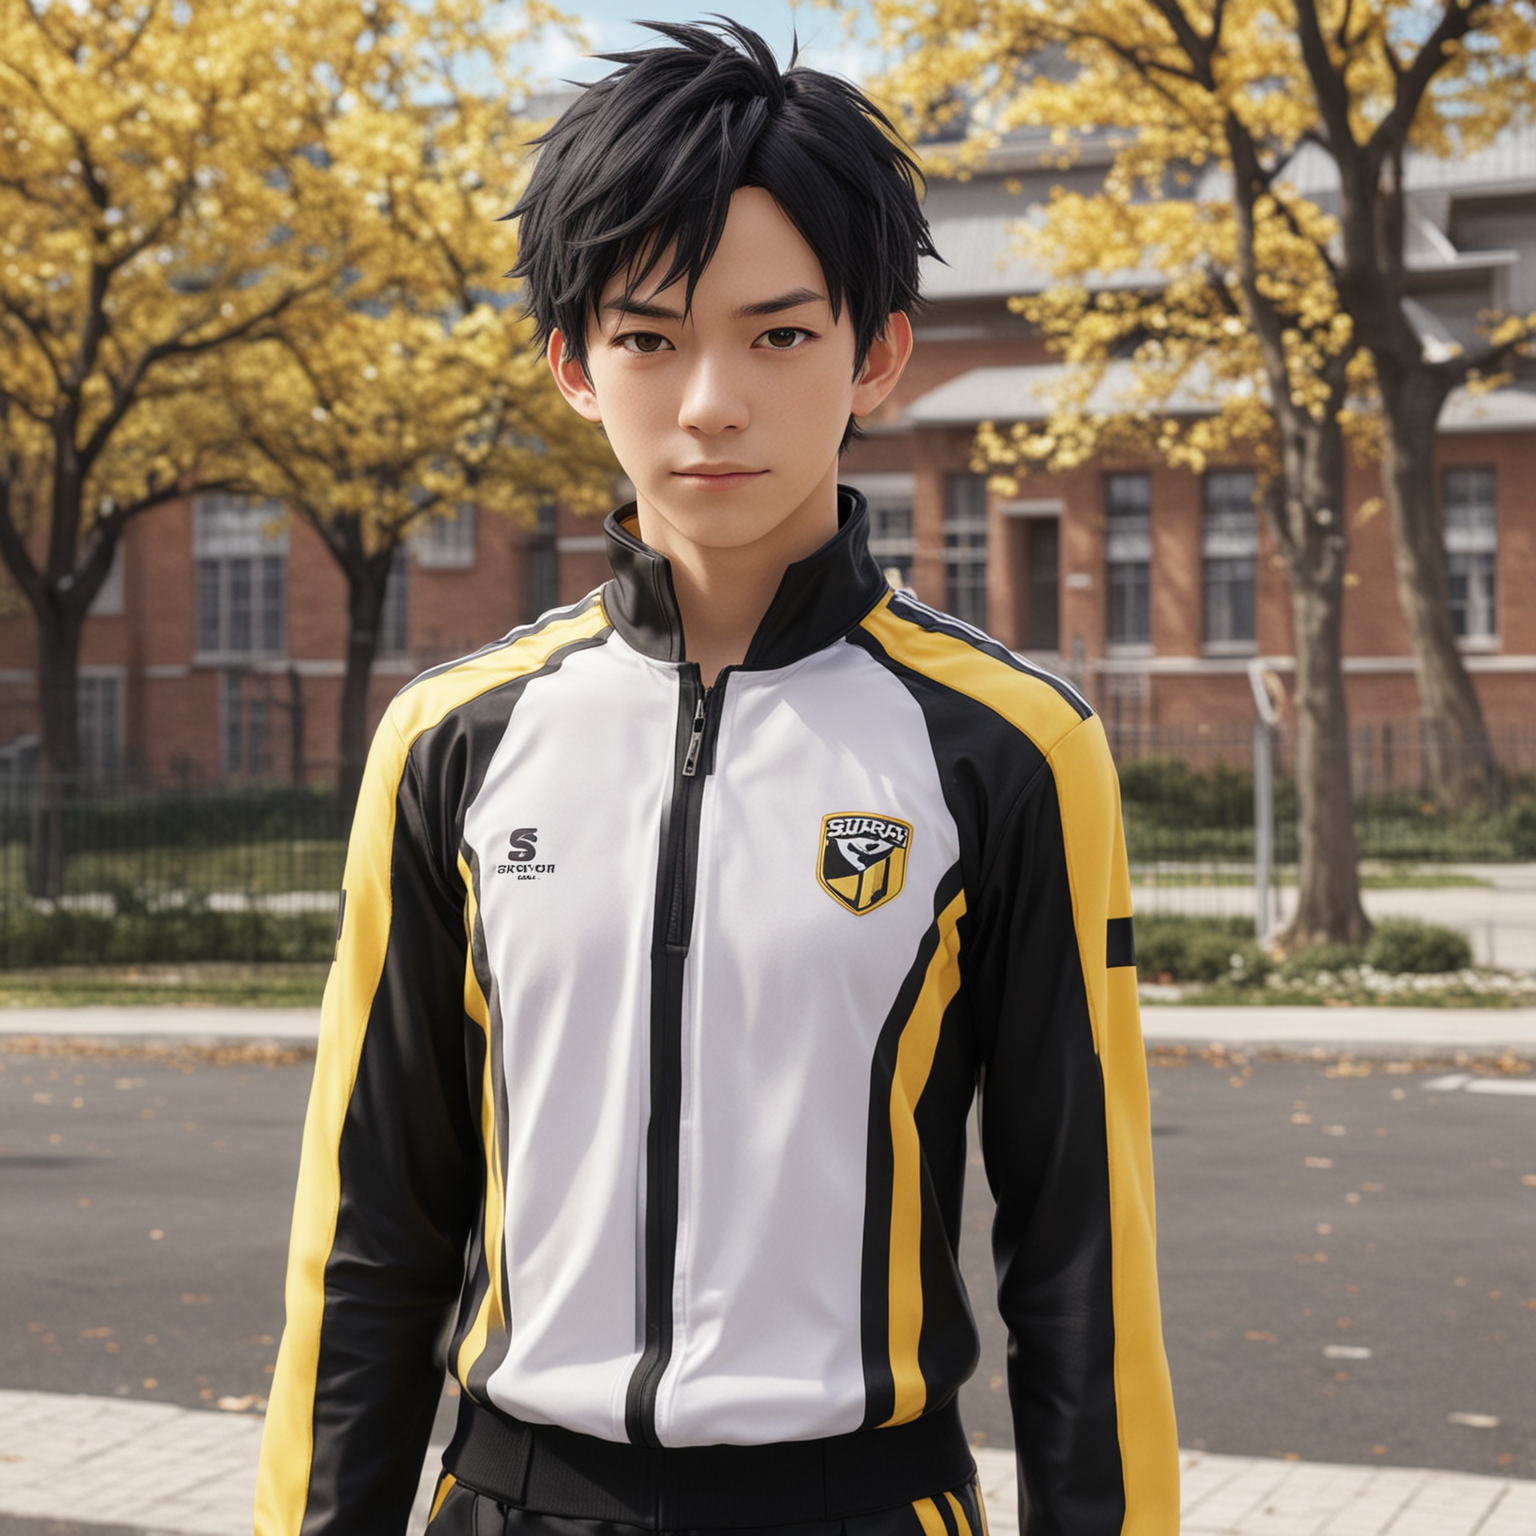 Subaru Natsuki HighSchool Sports Attire Portrait in School Yard